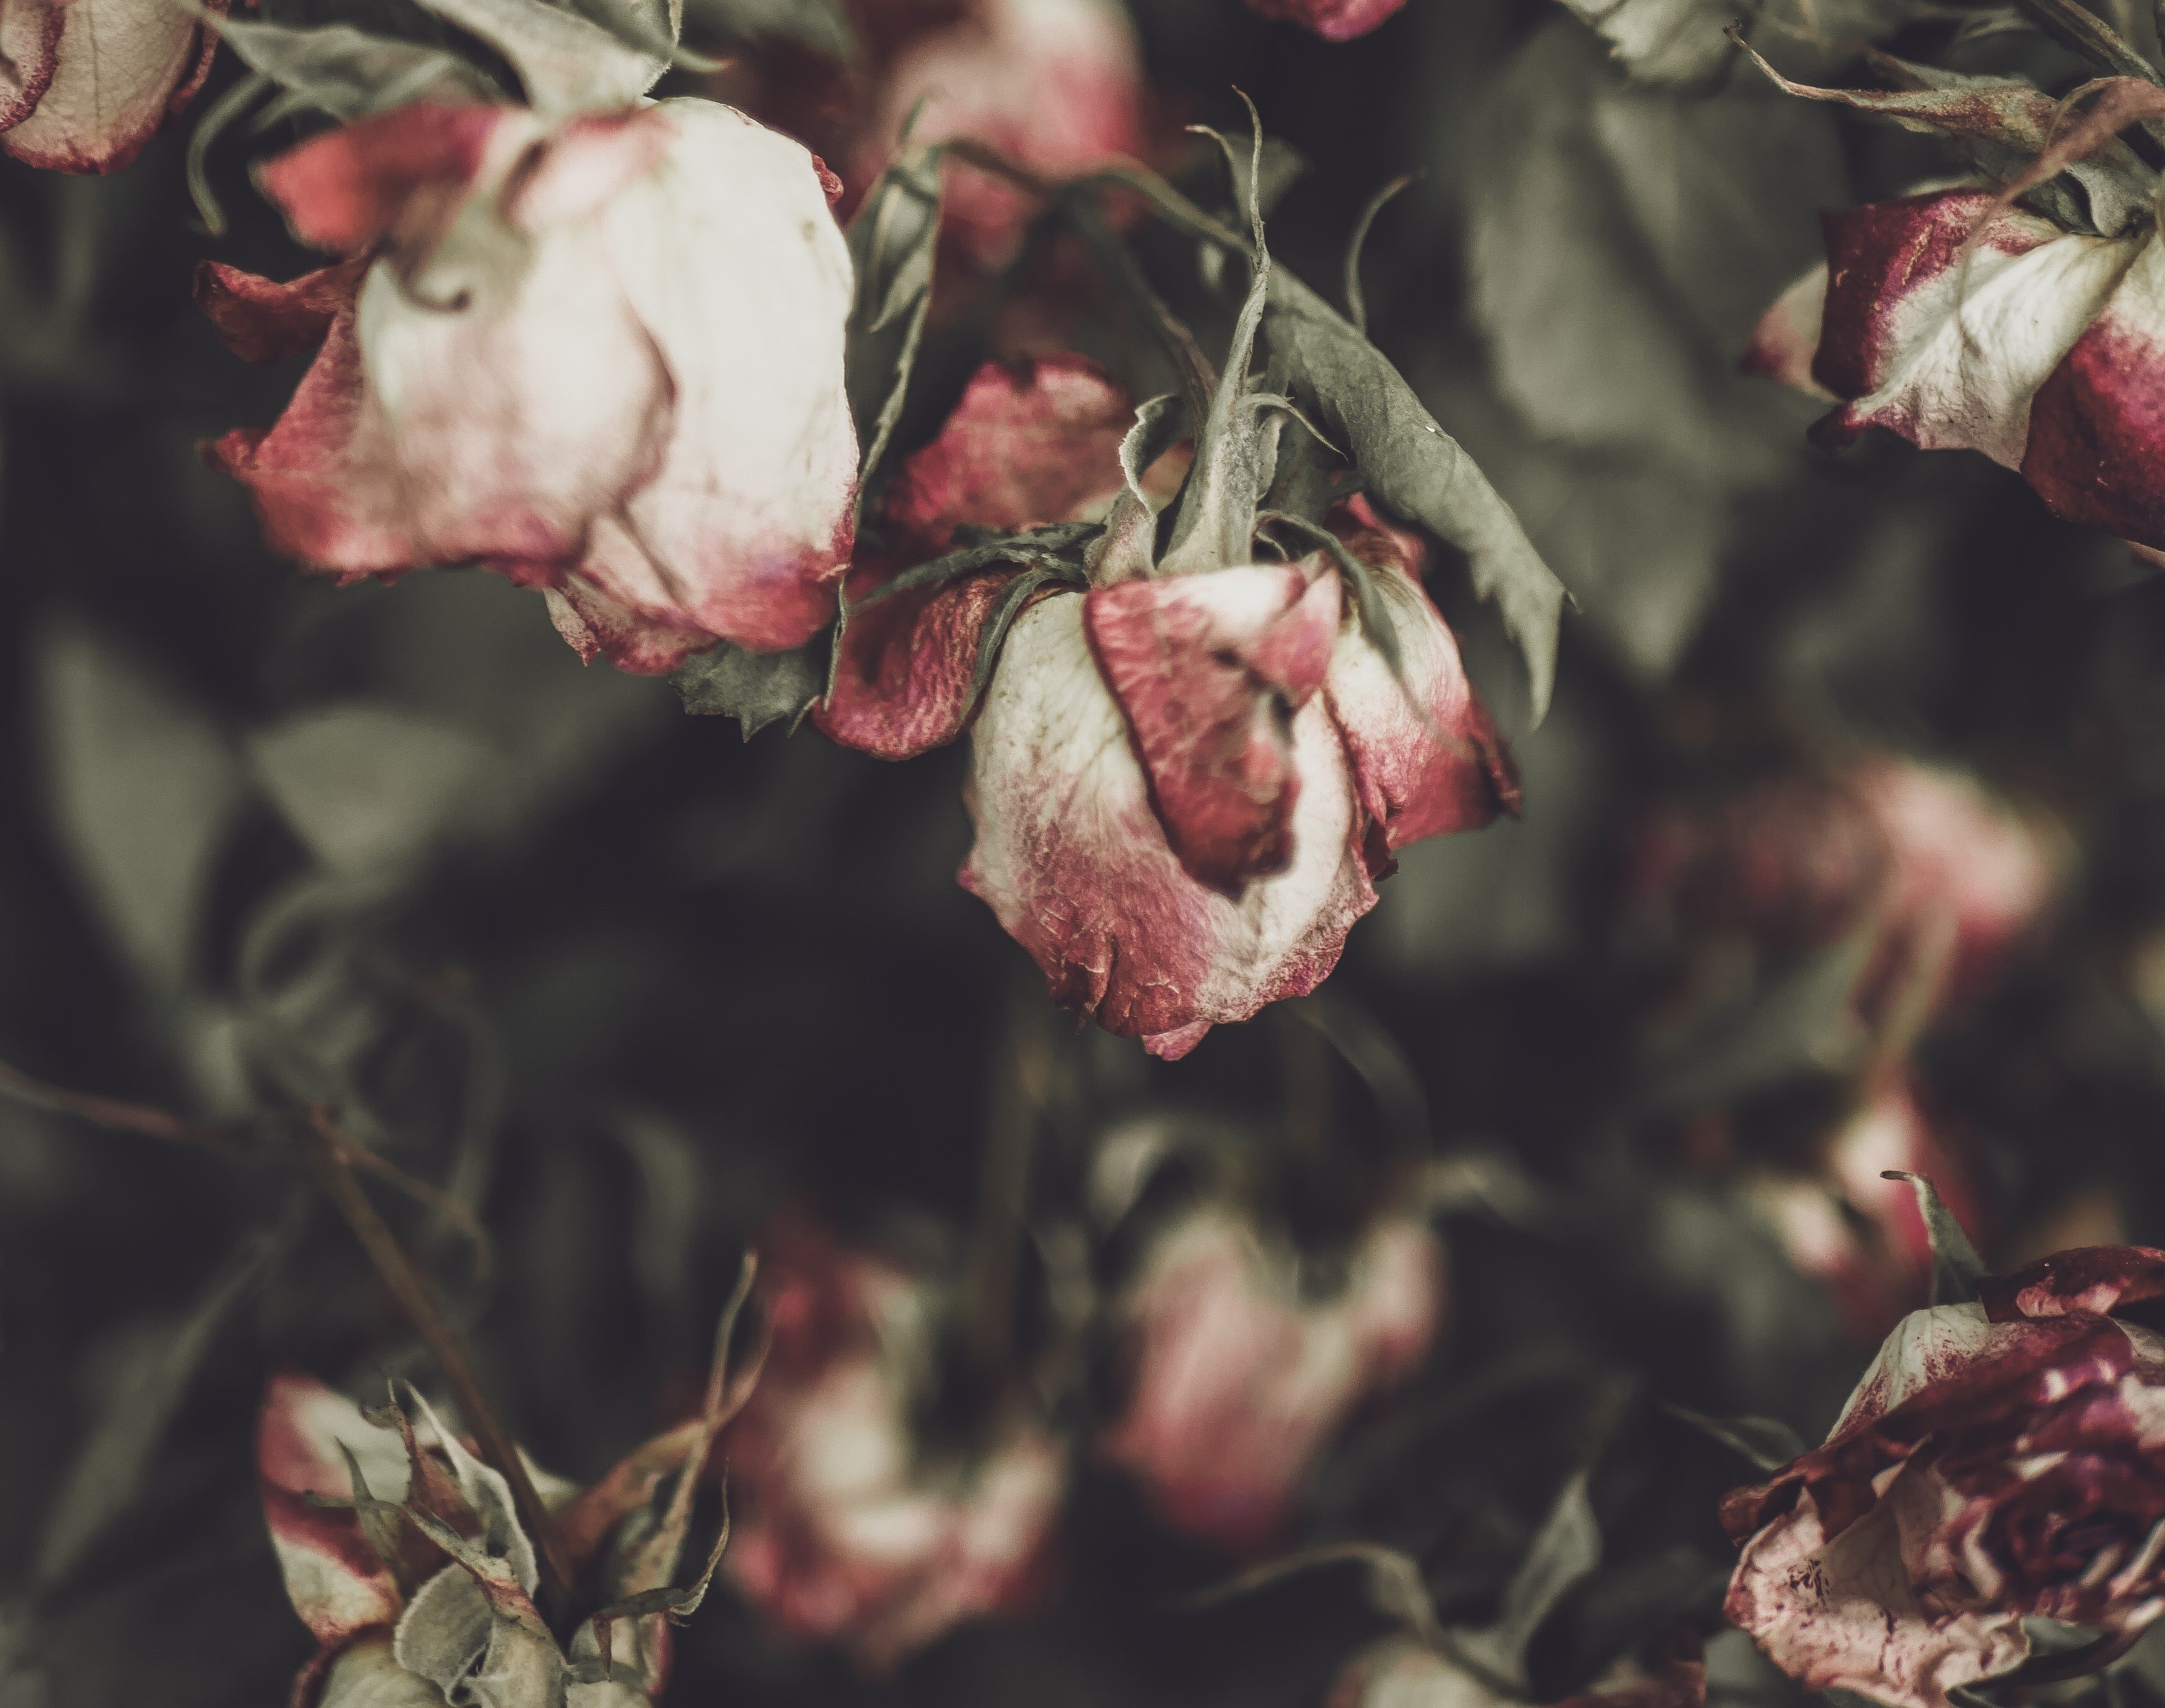 Agatha was shocked to find her dear roses dead & destroyed. | Source: Unsplash